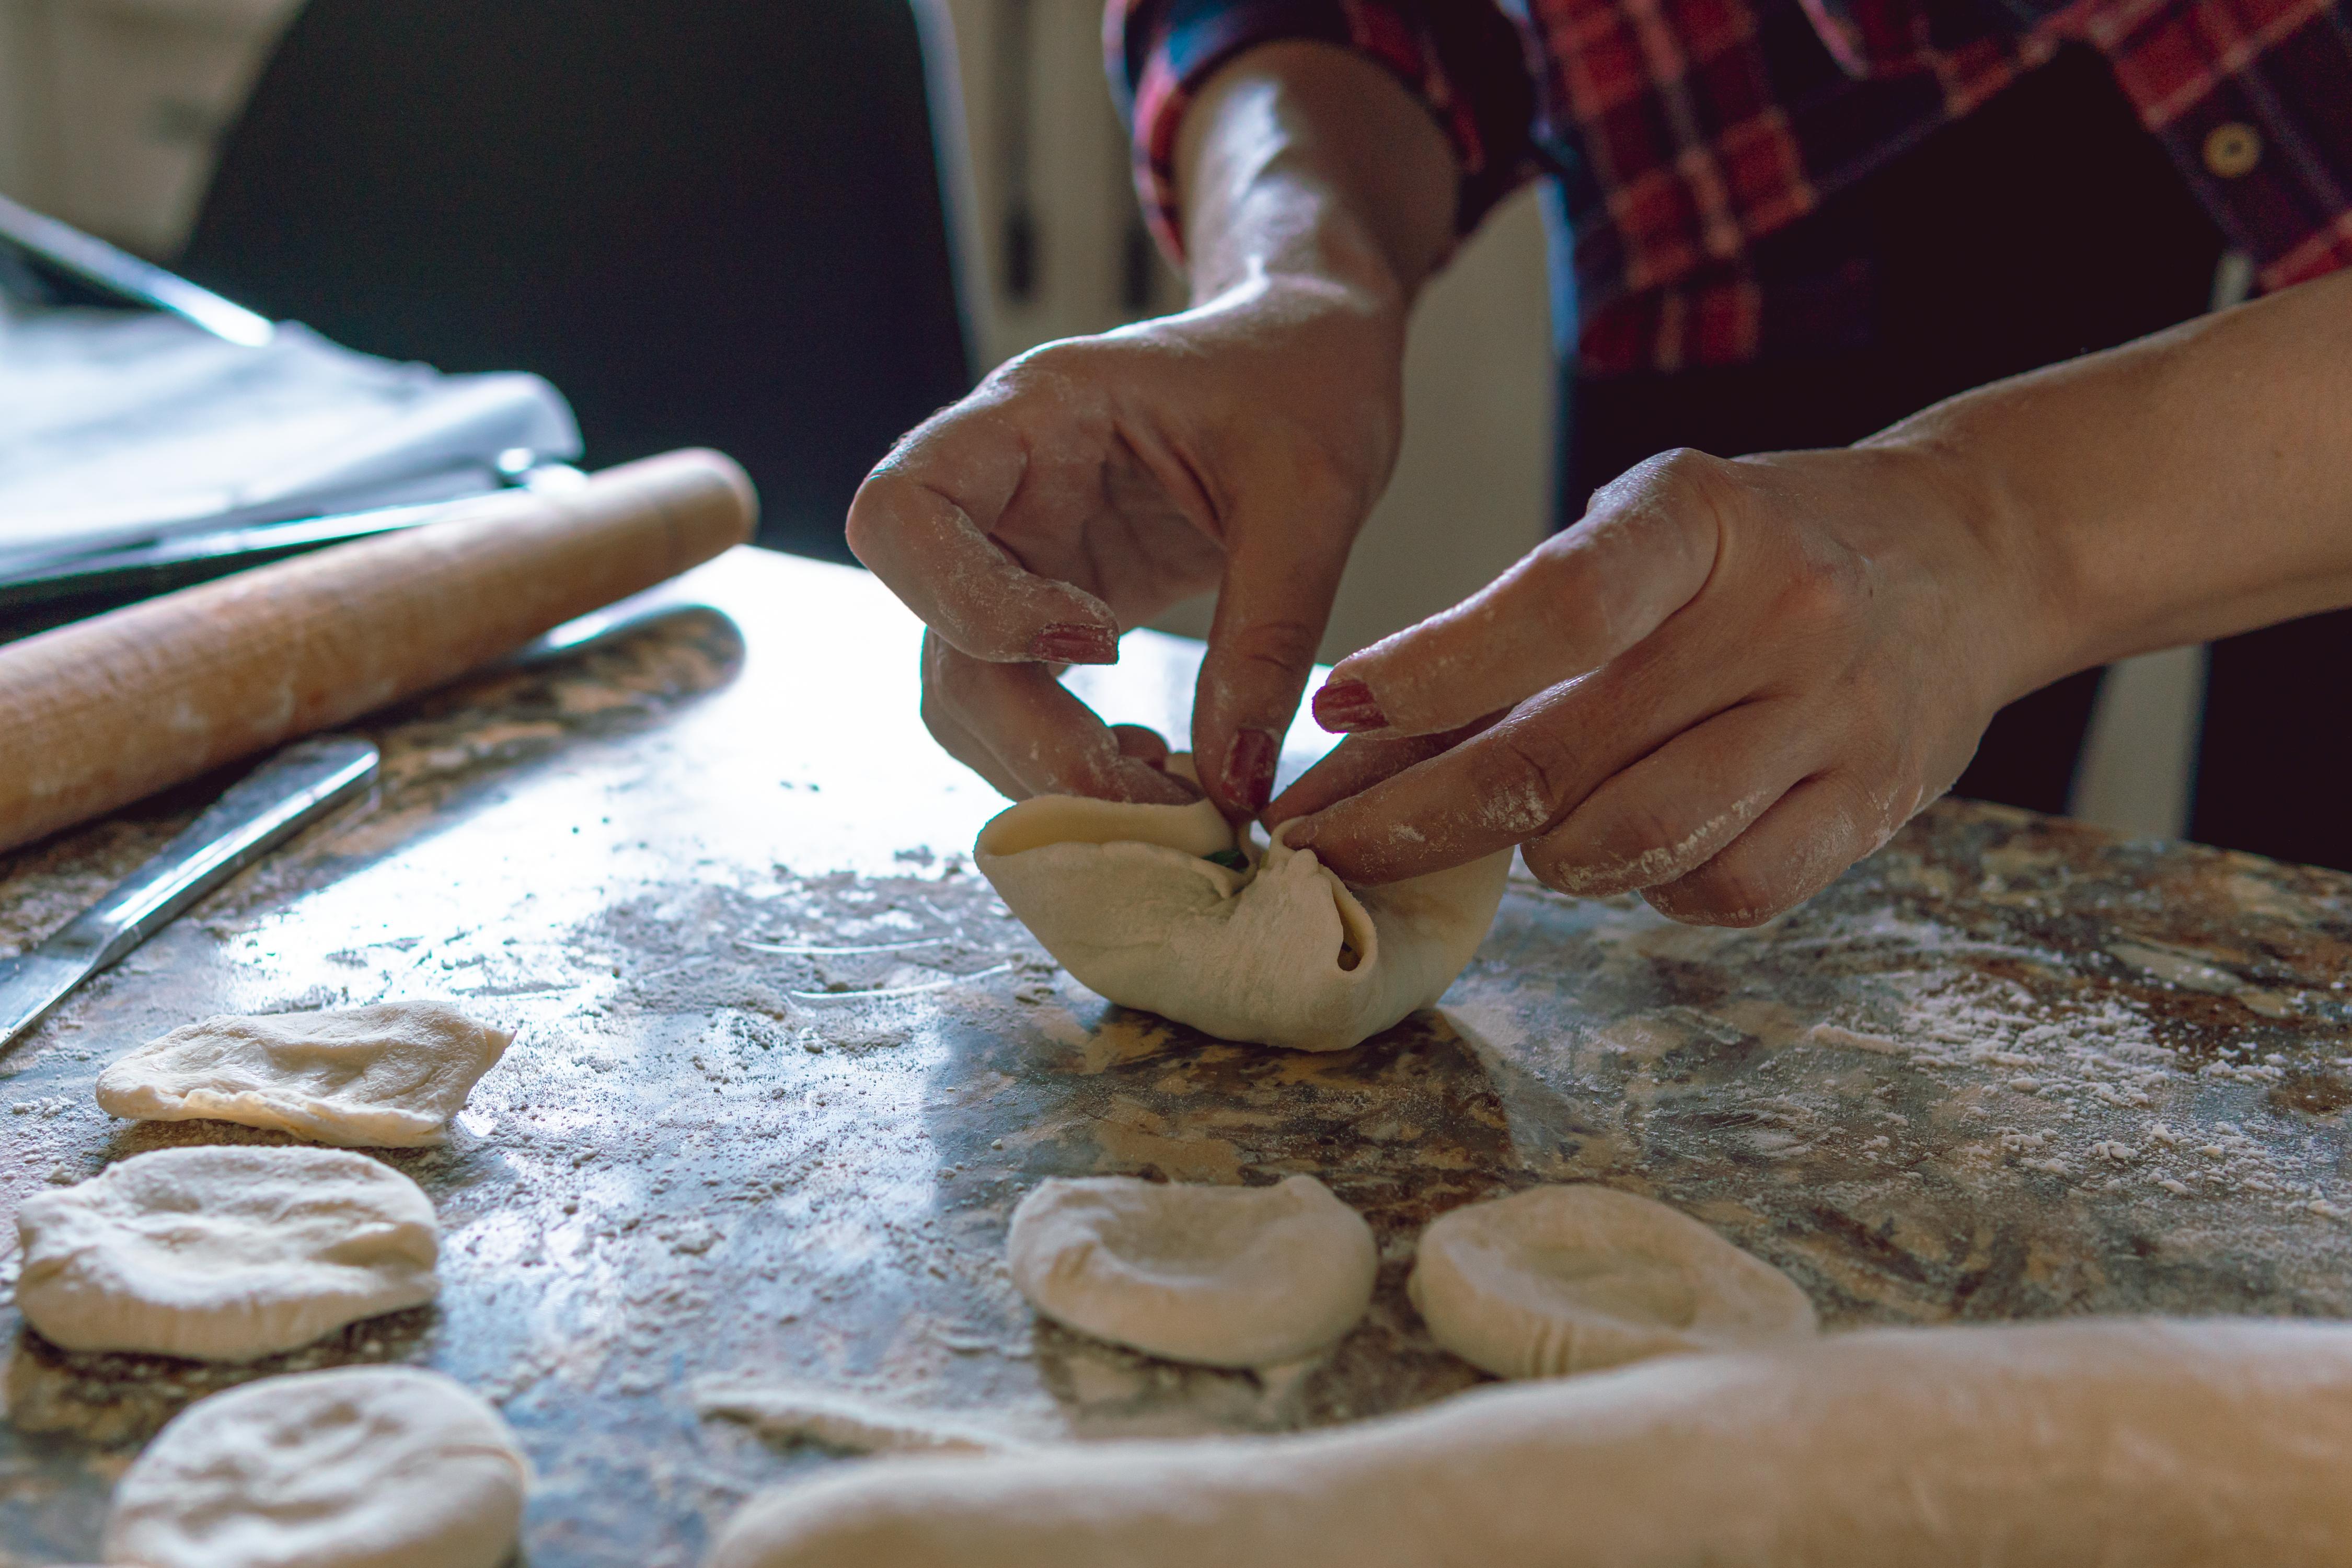 Traditional preparation for samsa involves baking it in a tandoor. © eranicle / Shutterstock